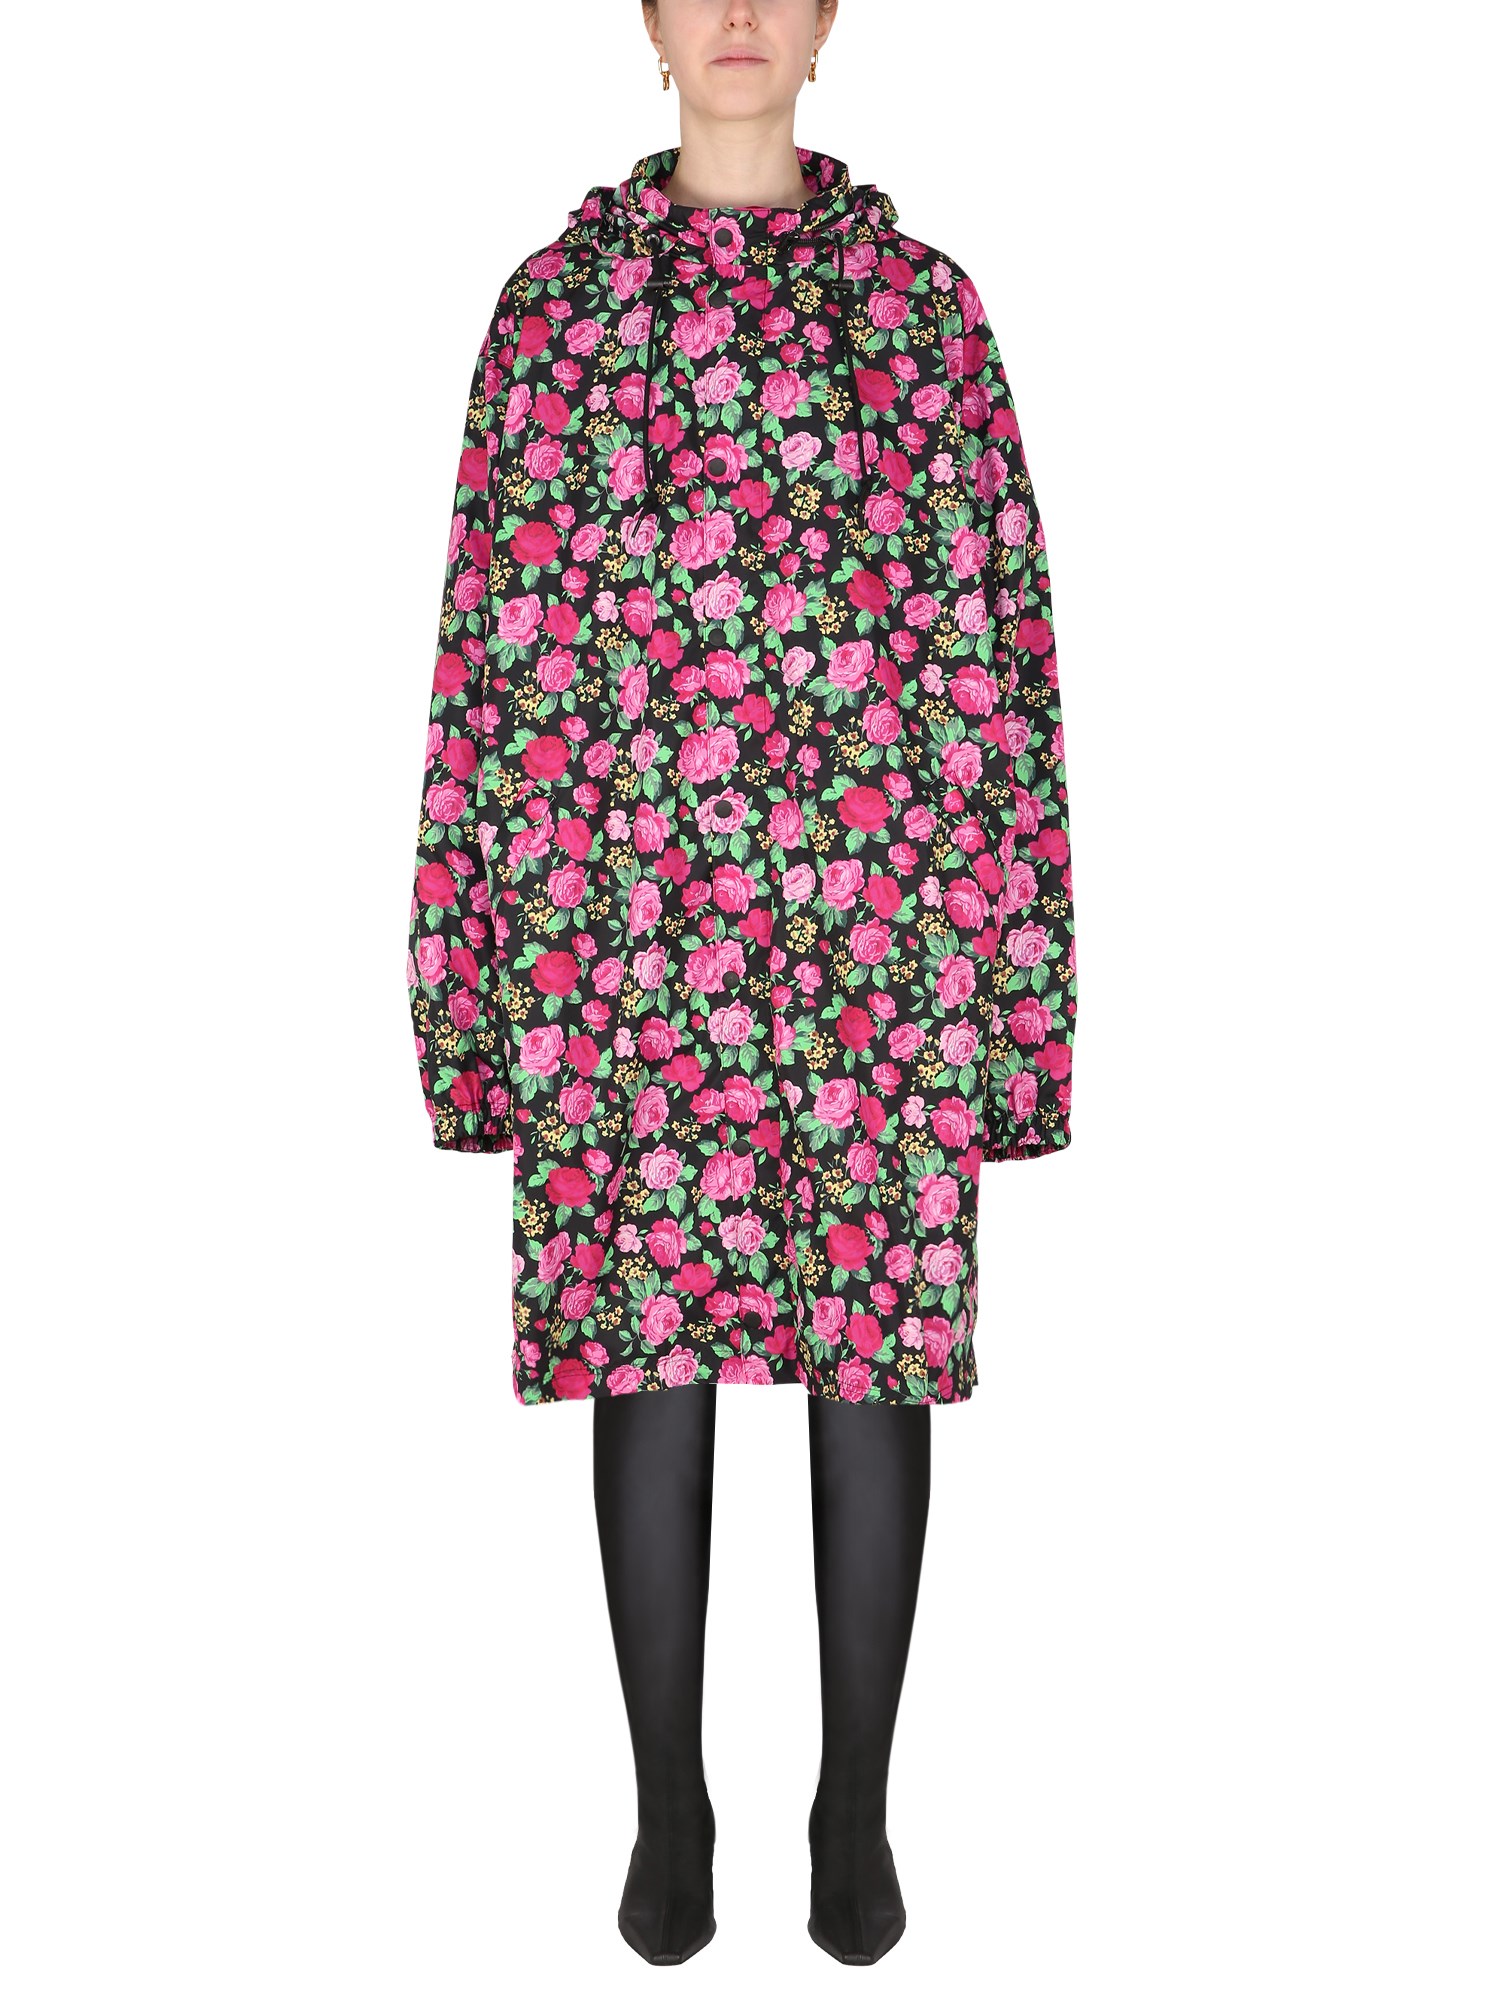 balenciaga coat with floral pattern